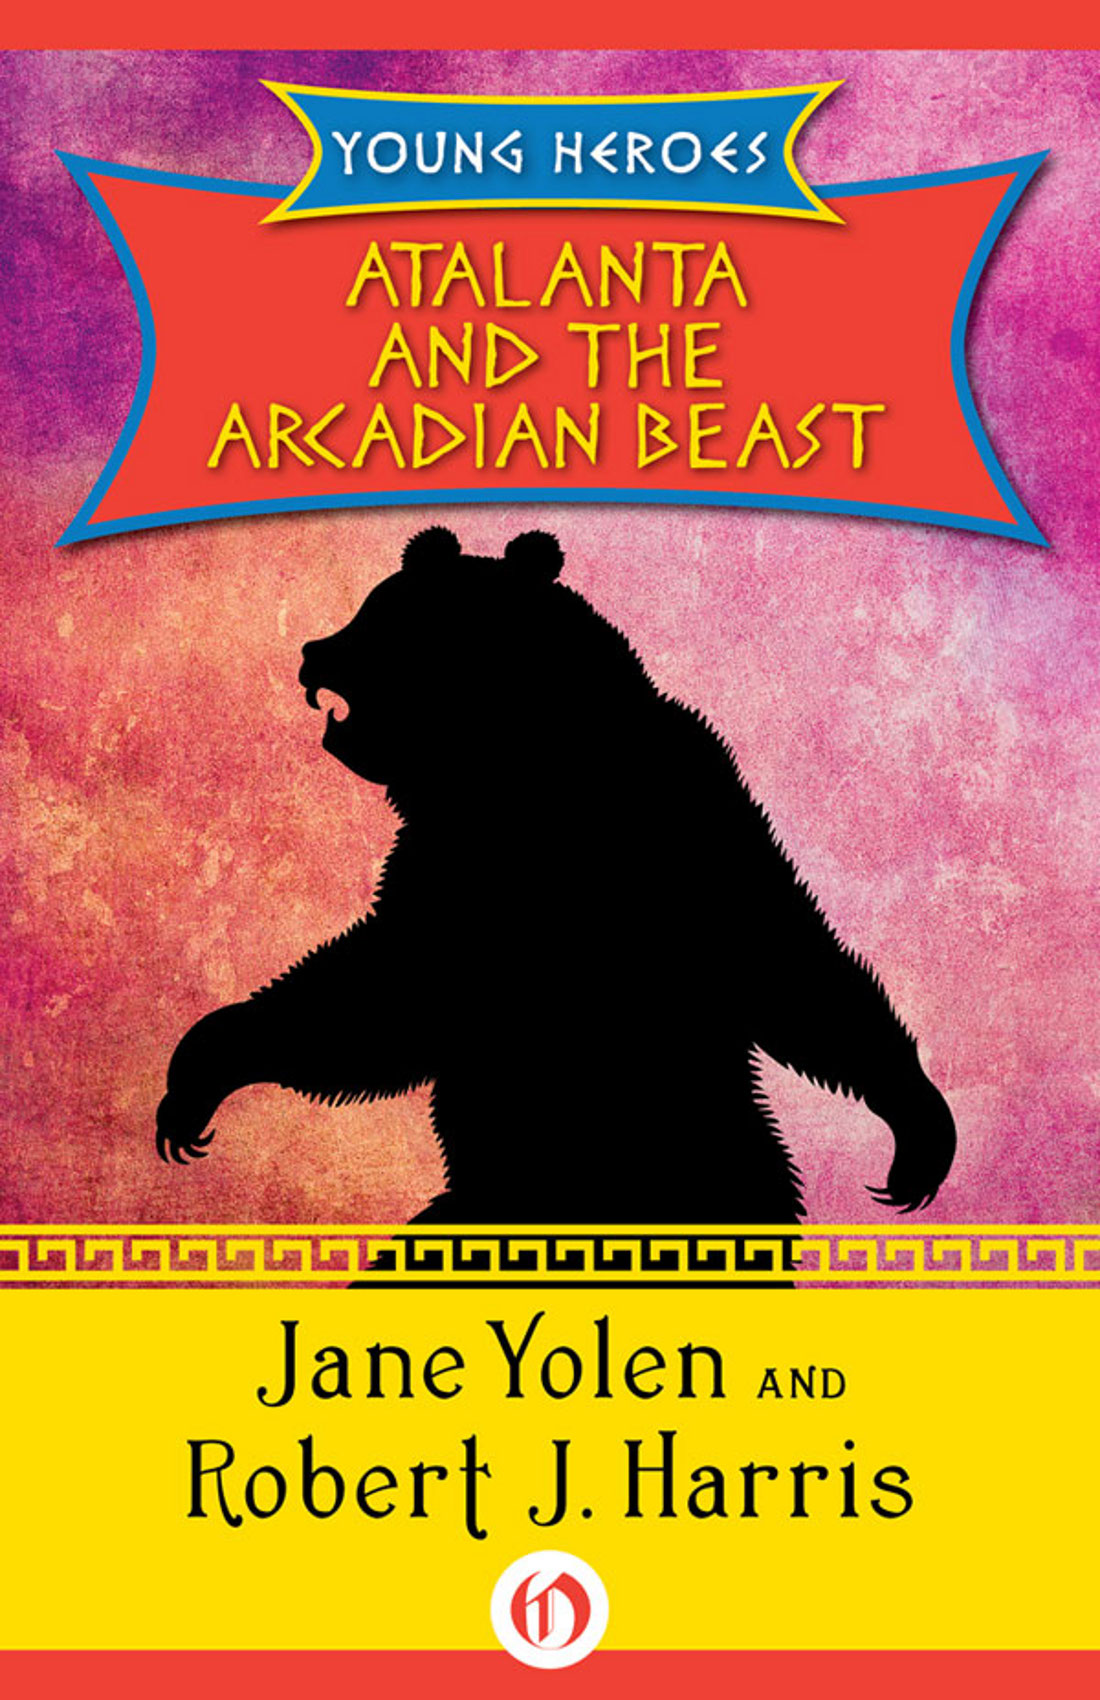 Atalanta and the Arcadian Beast by Jane Yolen